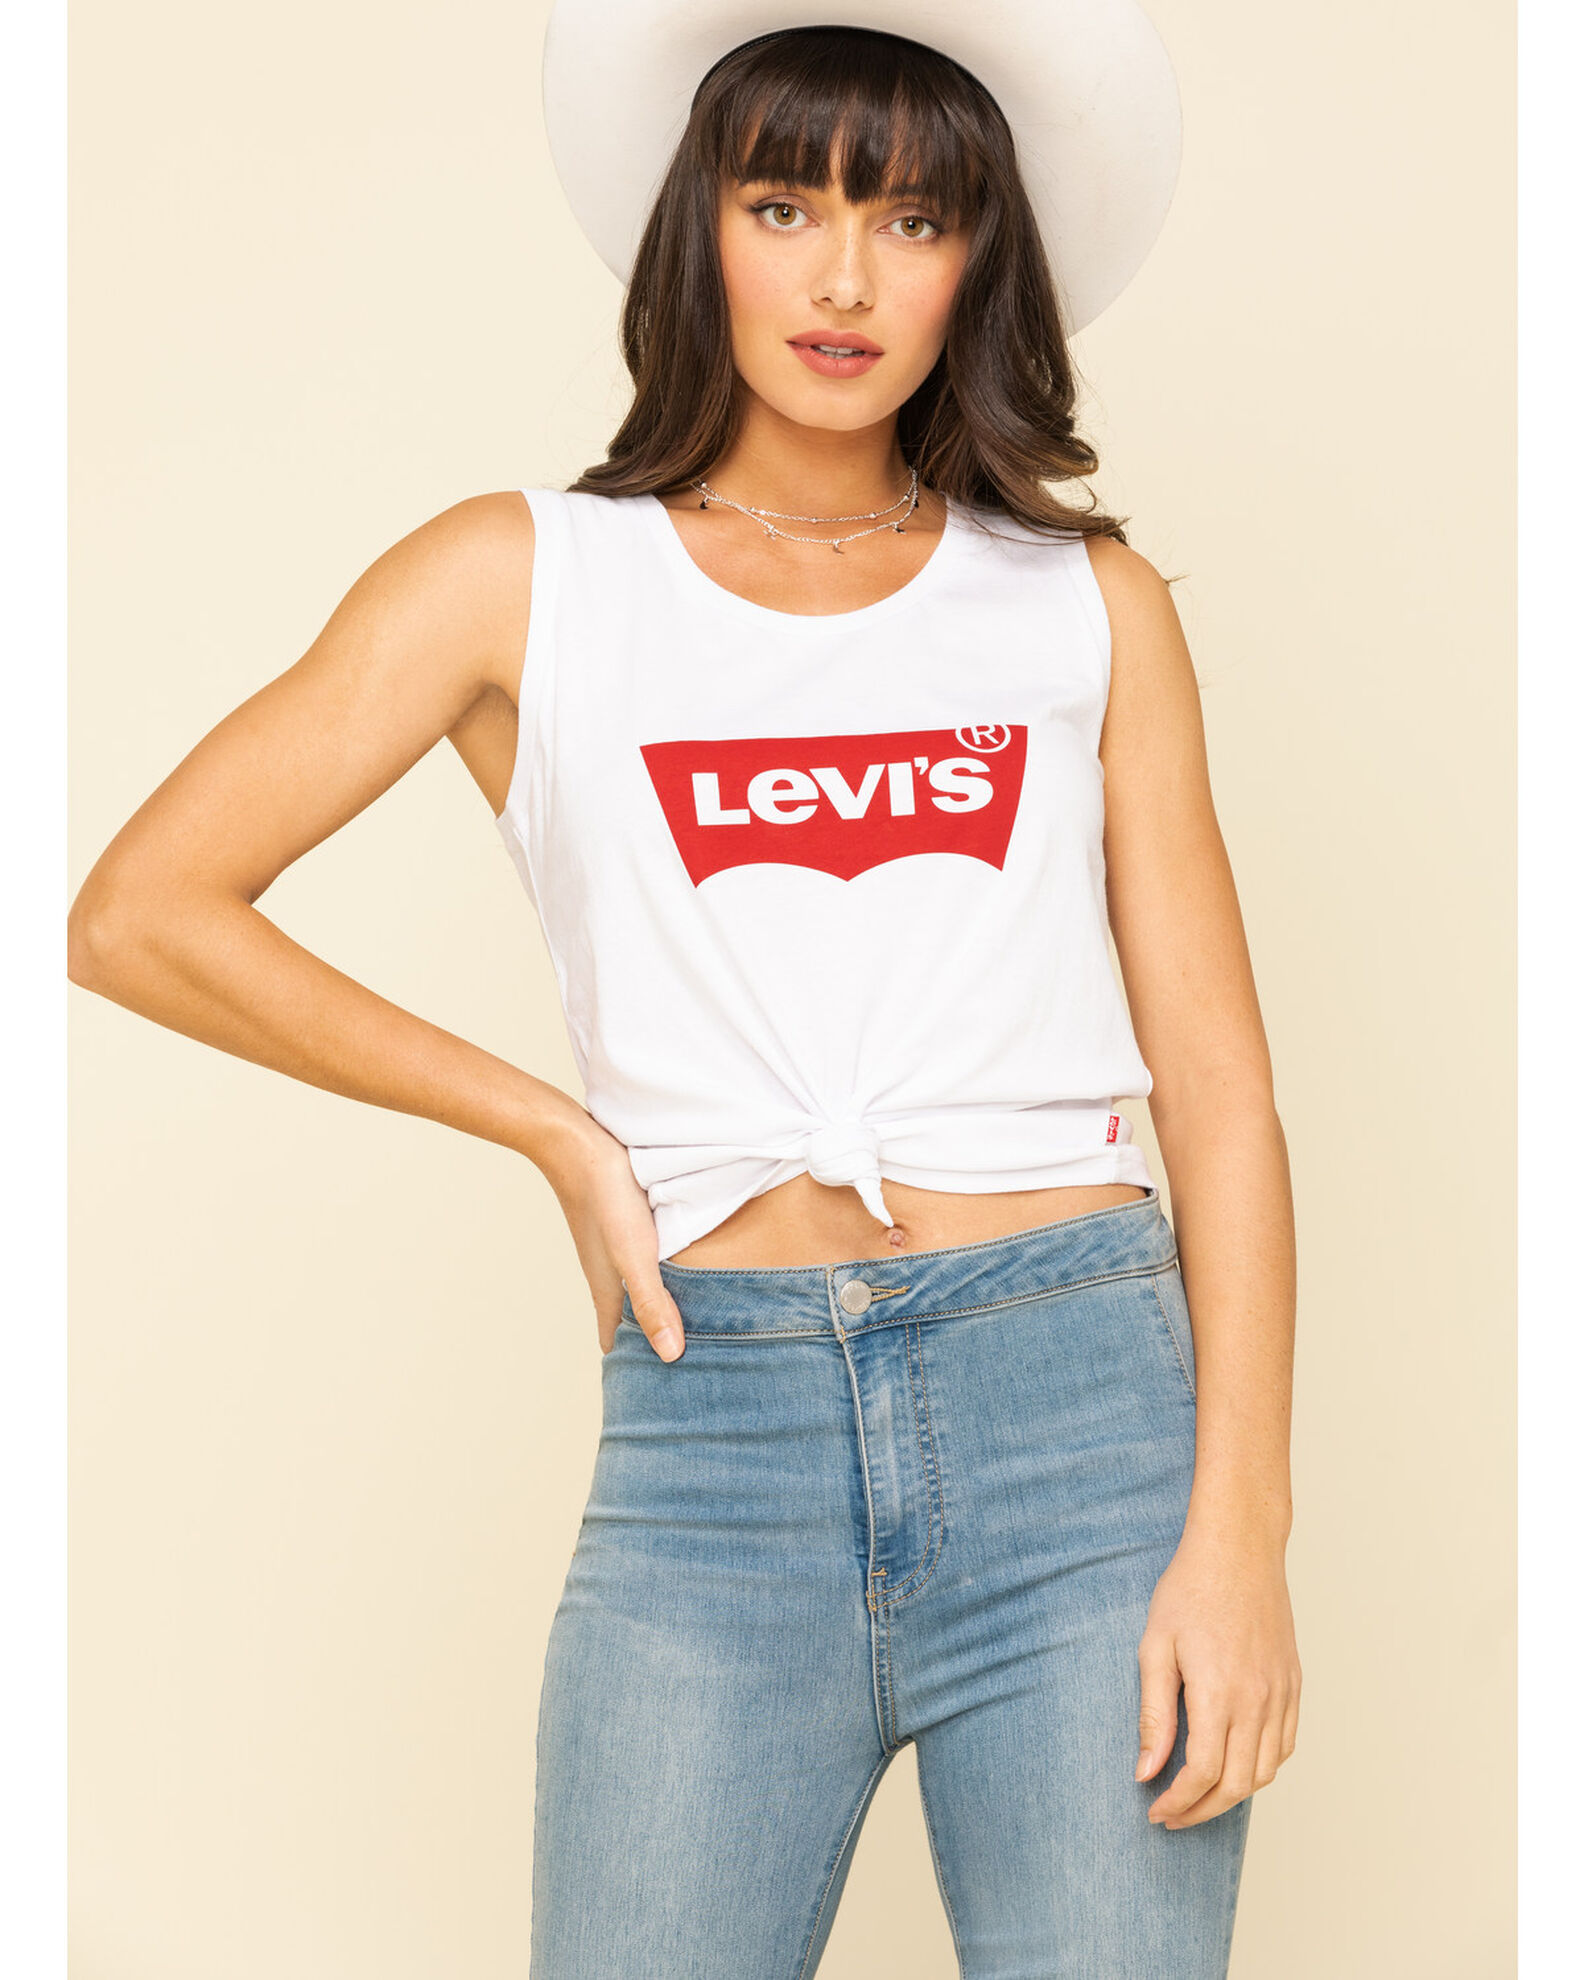 Levi's Women's White Batwing Logo Muscle Tank Top | Boot Barn